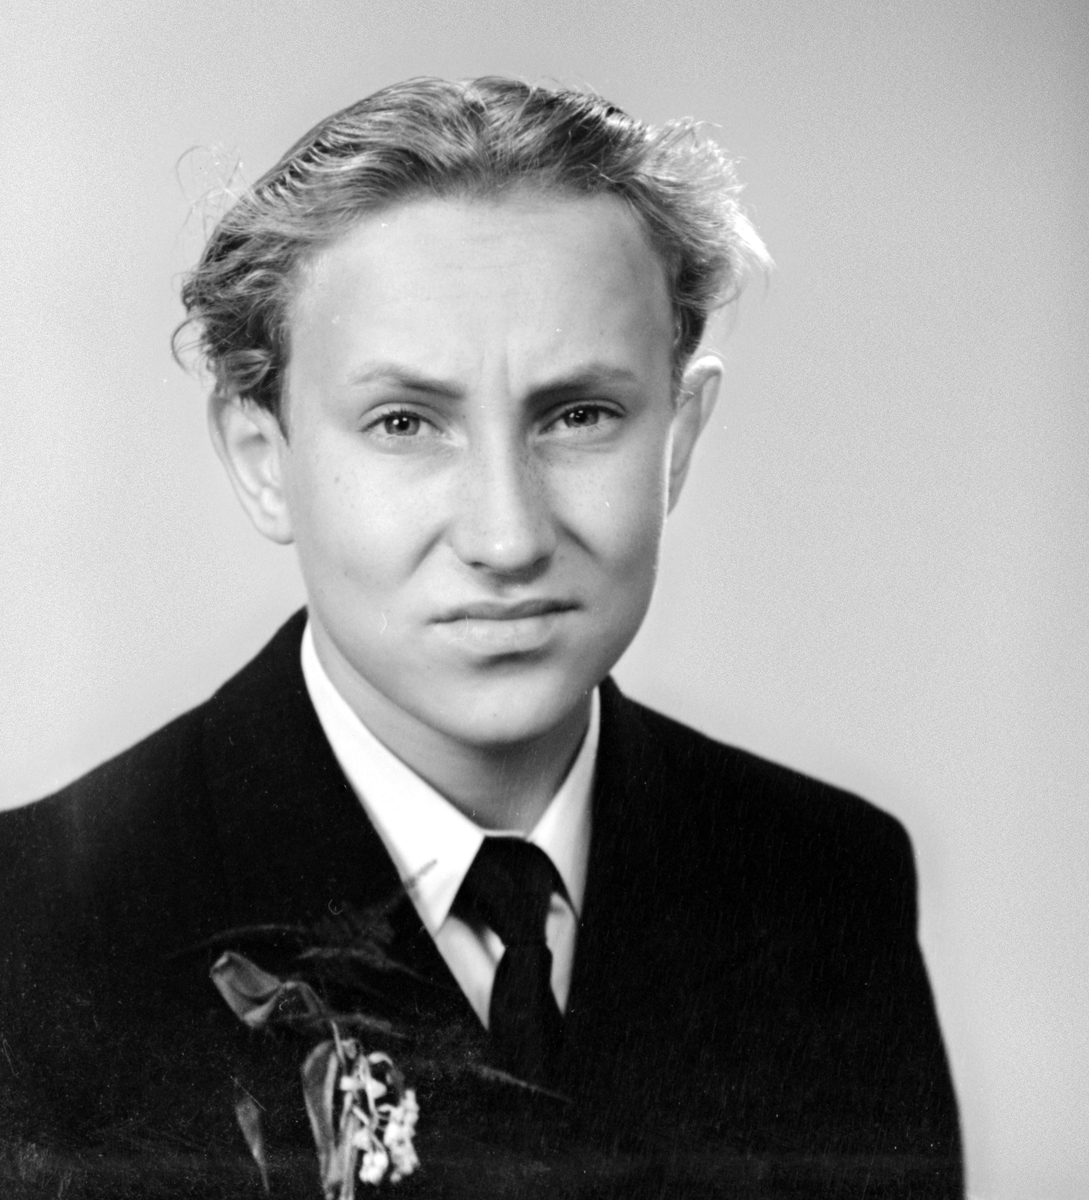 Konfirmanden Bertil Abrahamsson. Foto i maj 1950.
